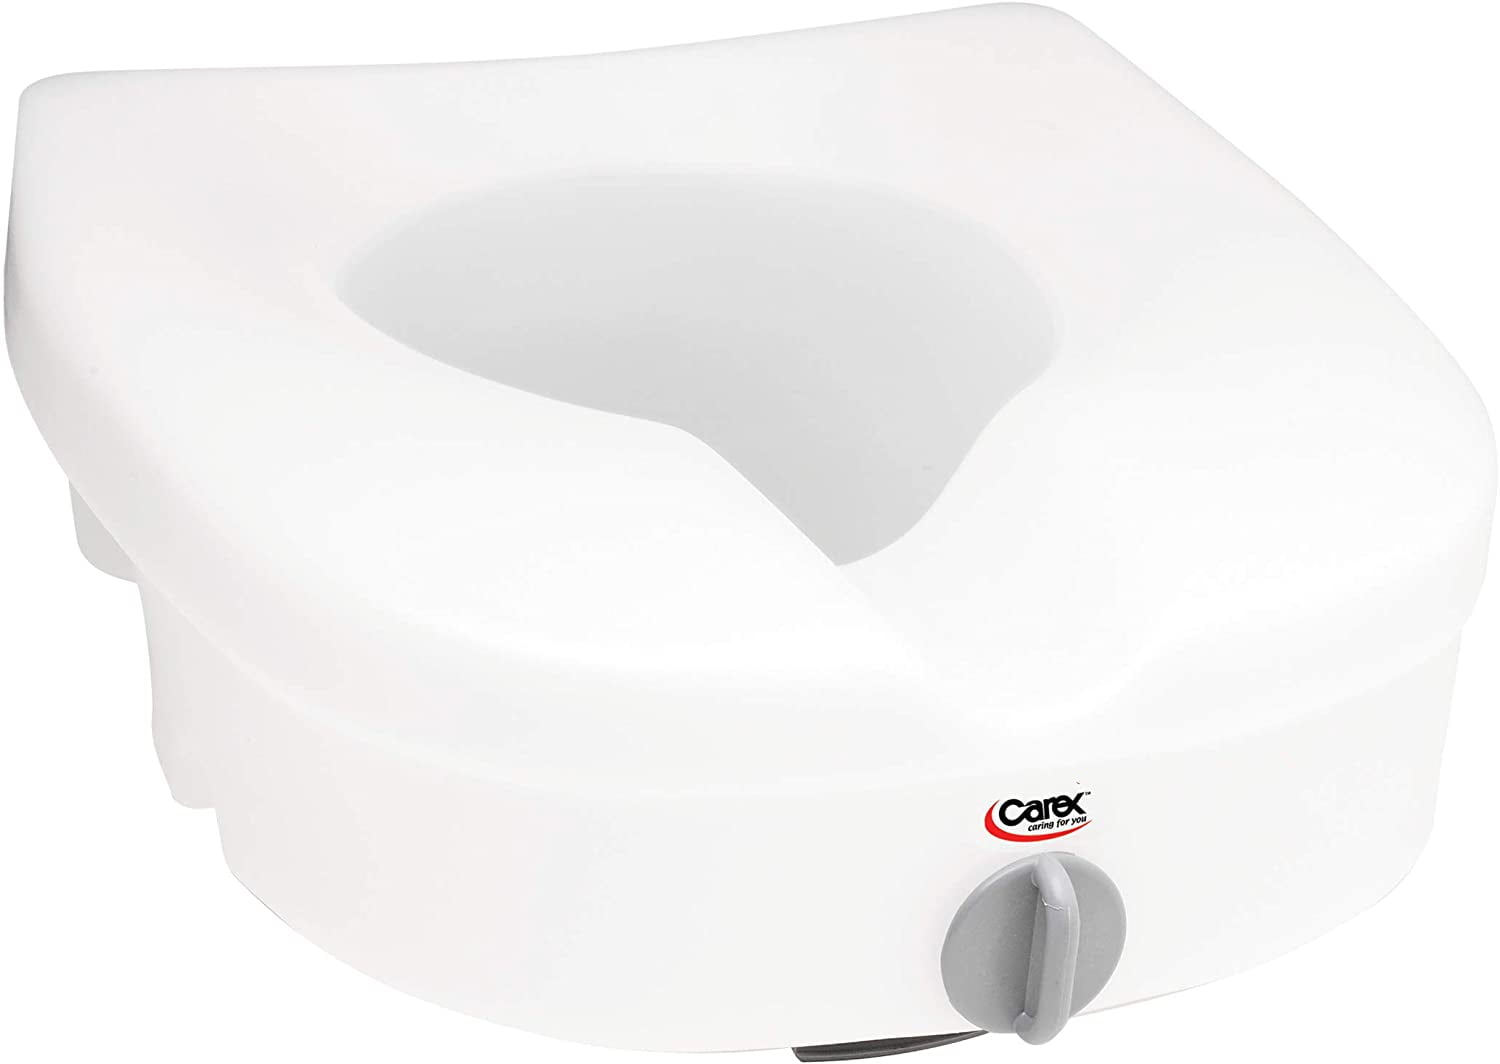 Carex E-Z Lock Raised Toilet Seat Elevator with Adjustable Armrests